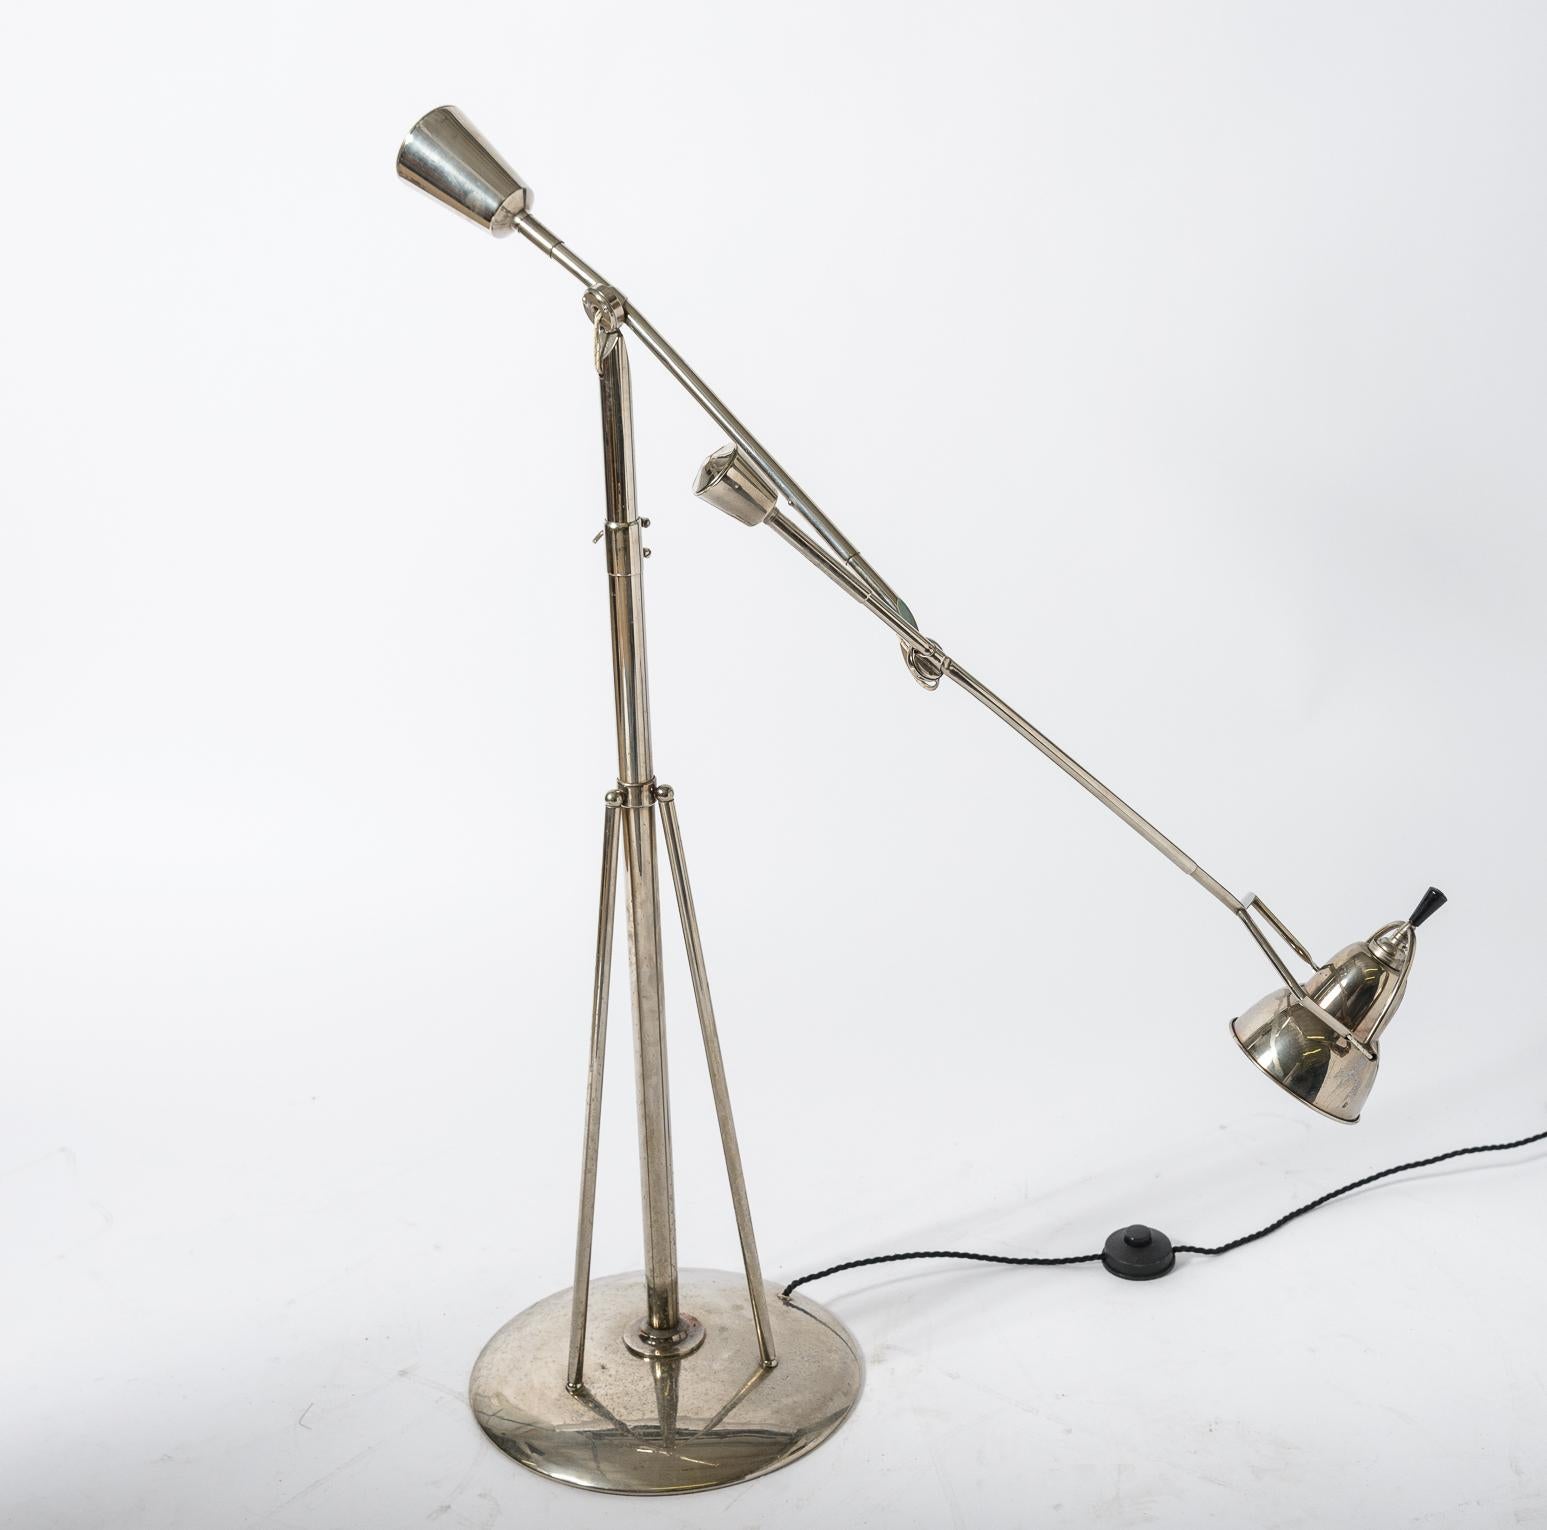 Edouard Wilfred Buquet Pivoting Floor Lamp.
A seldom seen design
Beautiful original surface